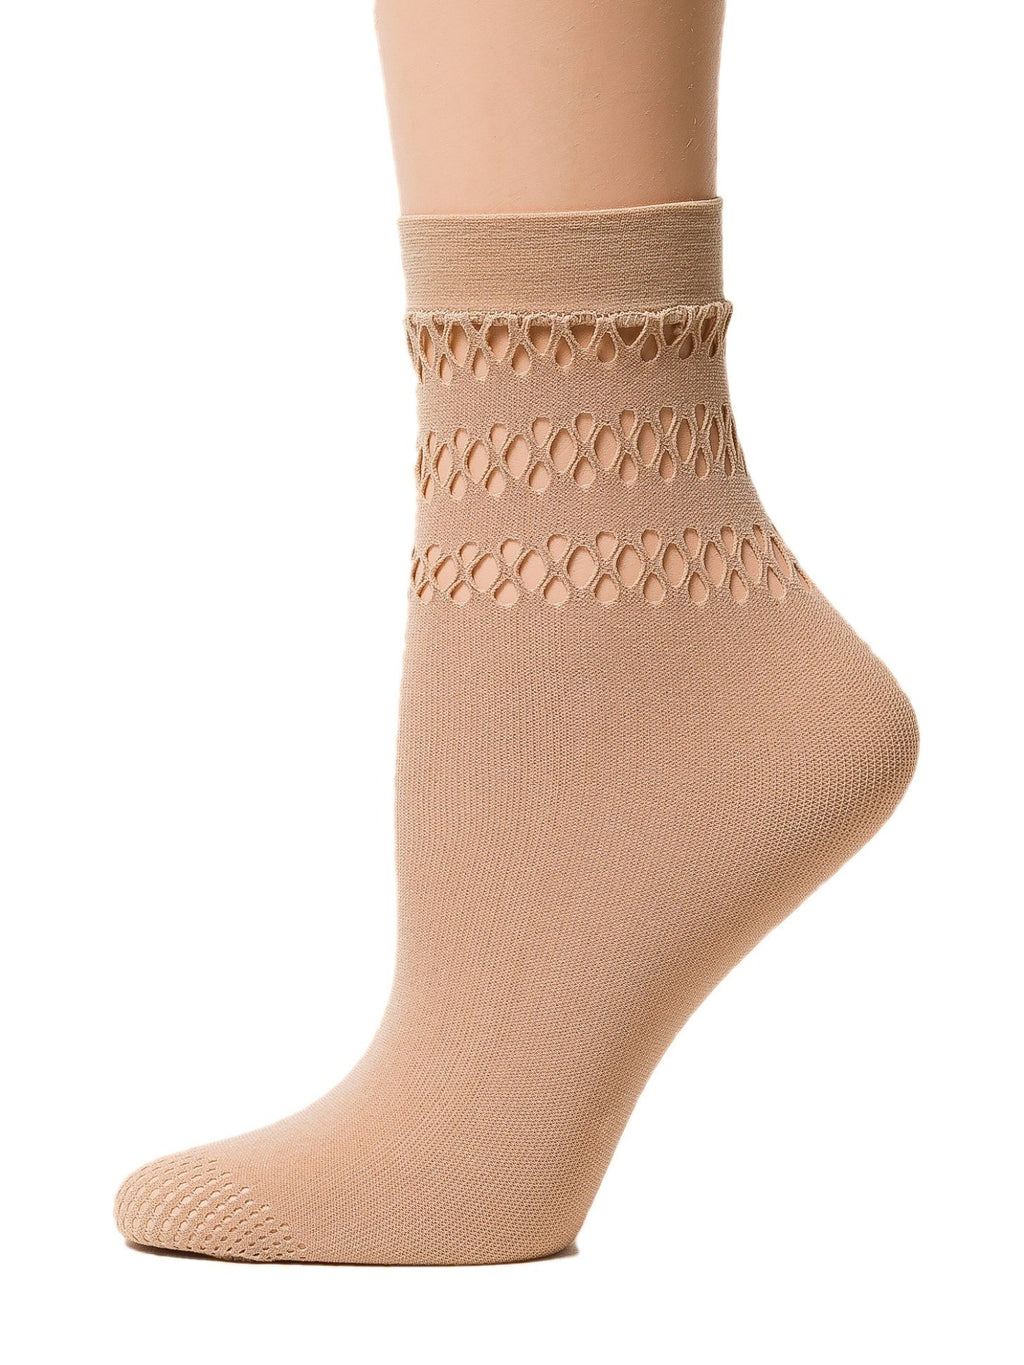 Trendy Beige Mesh Socks - Global Trendz Fashion®